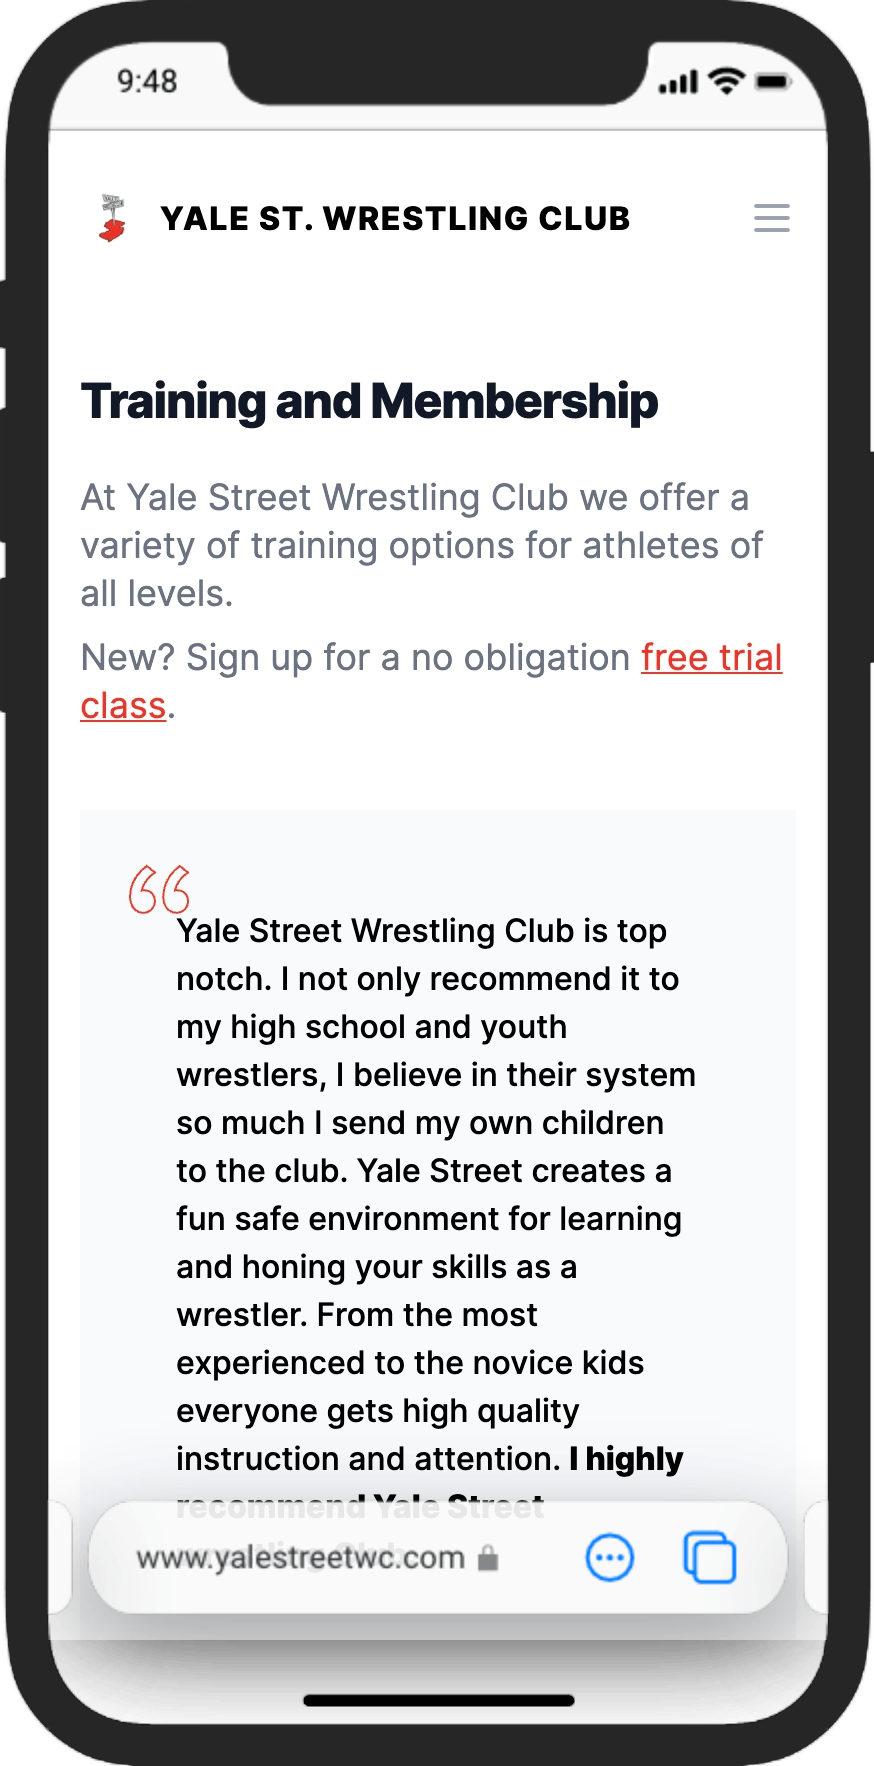 Yale St Wrestling Club website